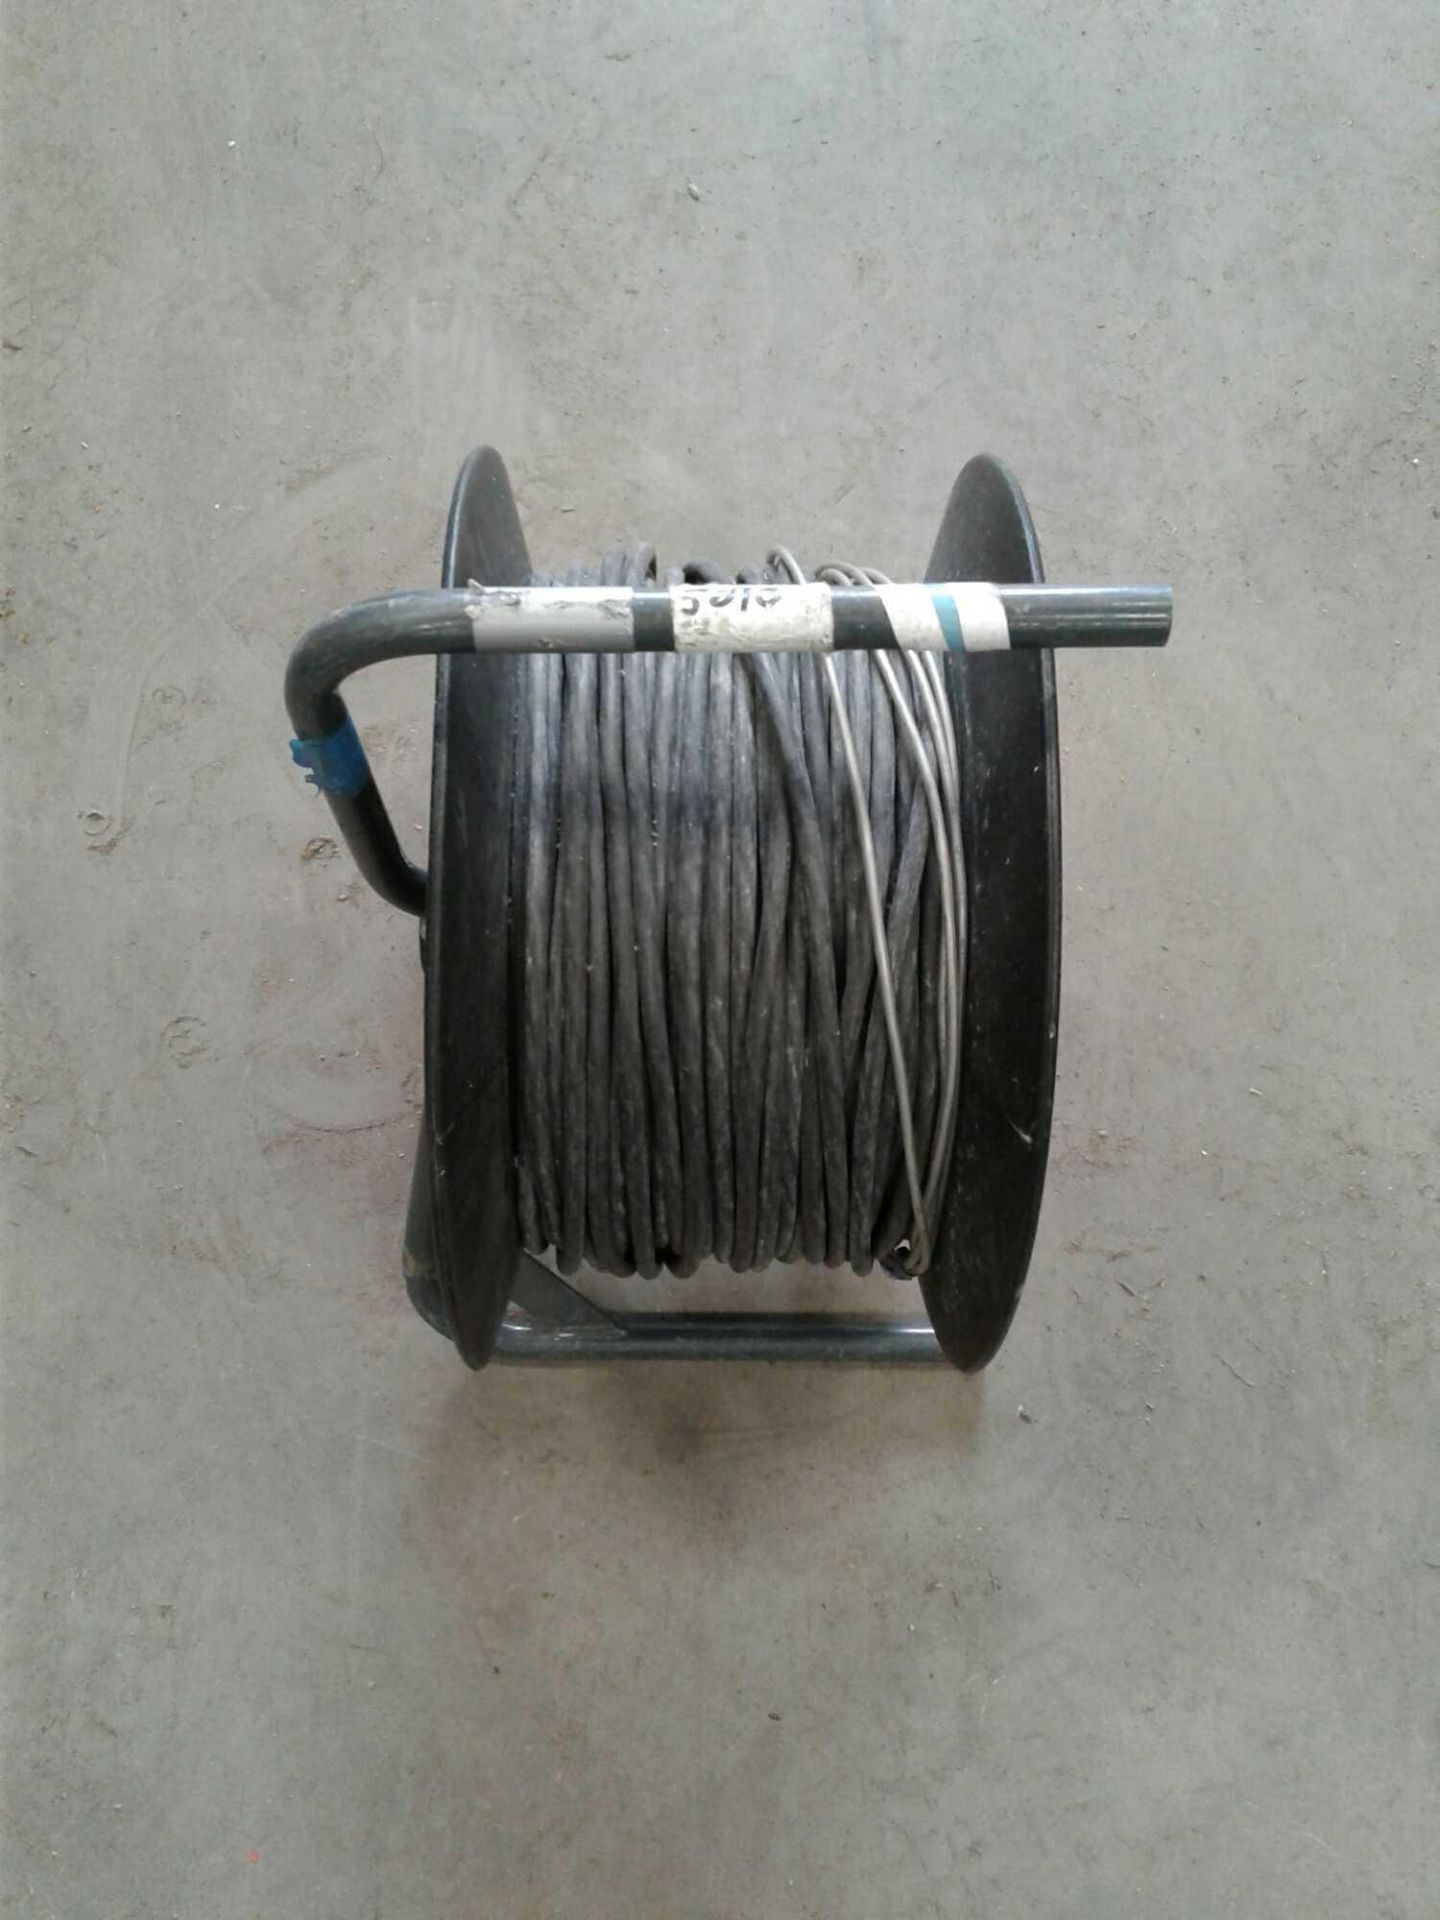 12 core speaker wire on spool - Image 2 of 4